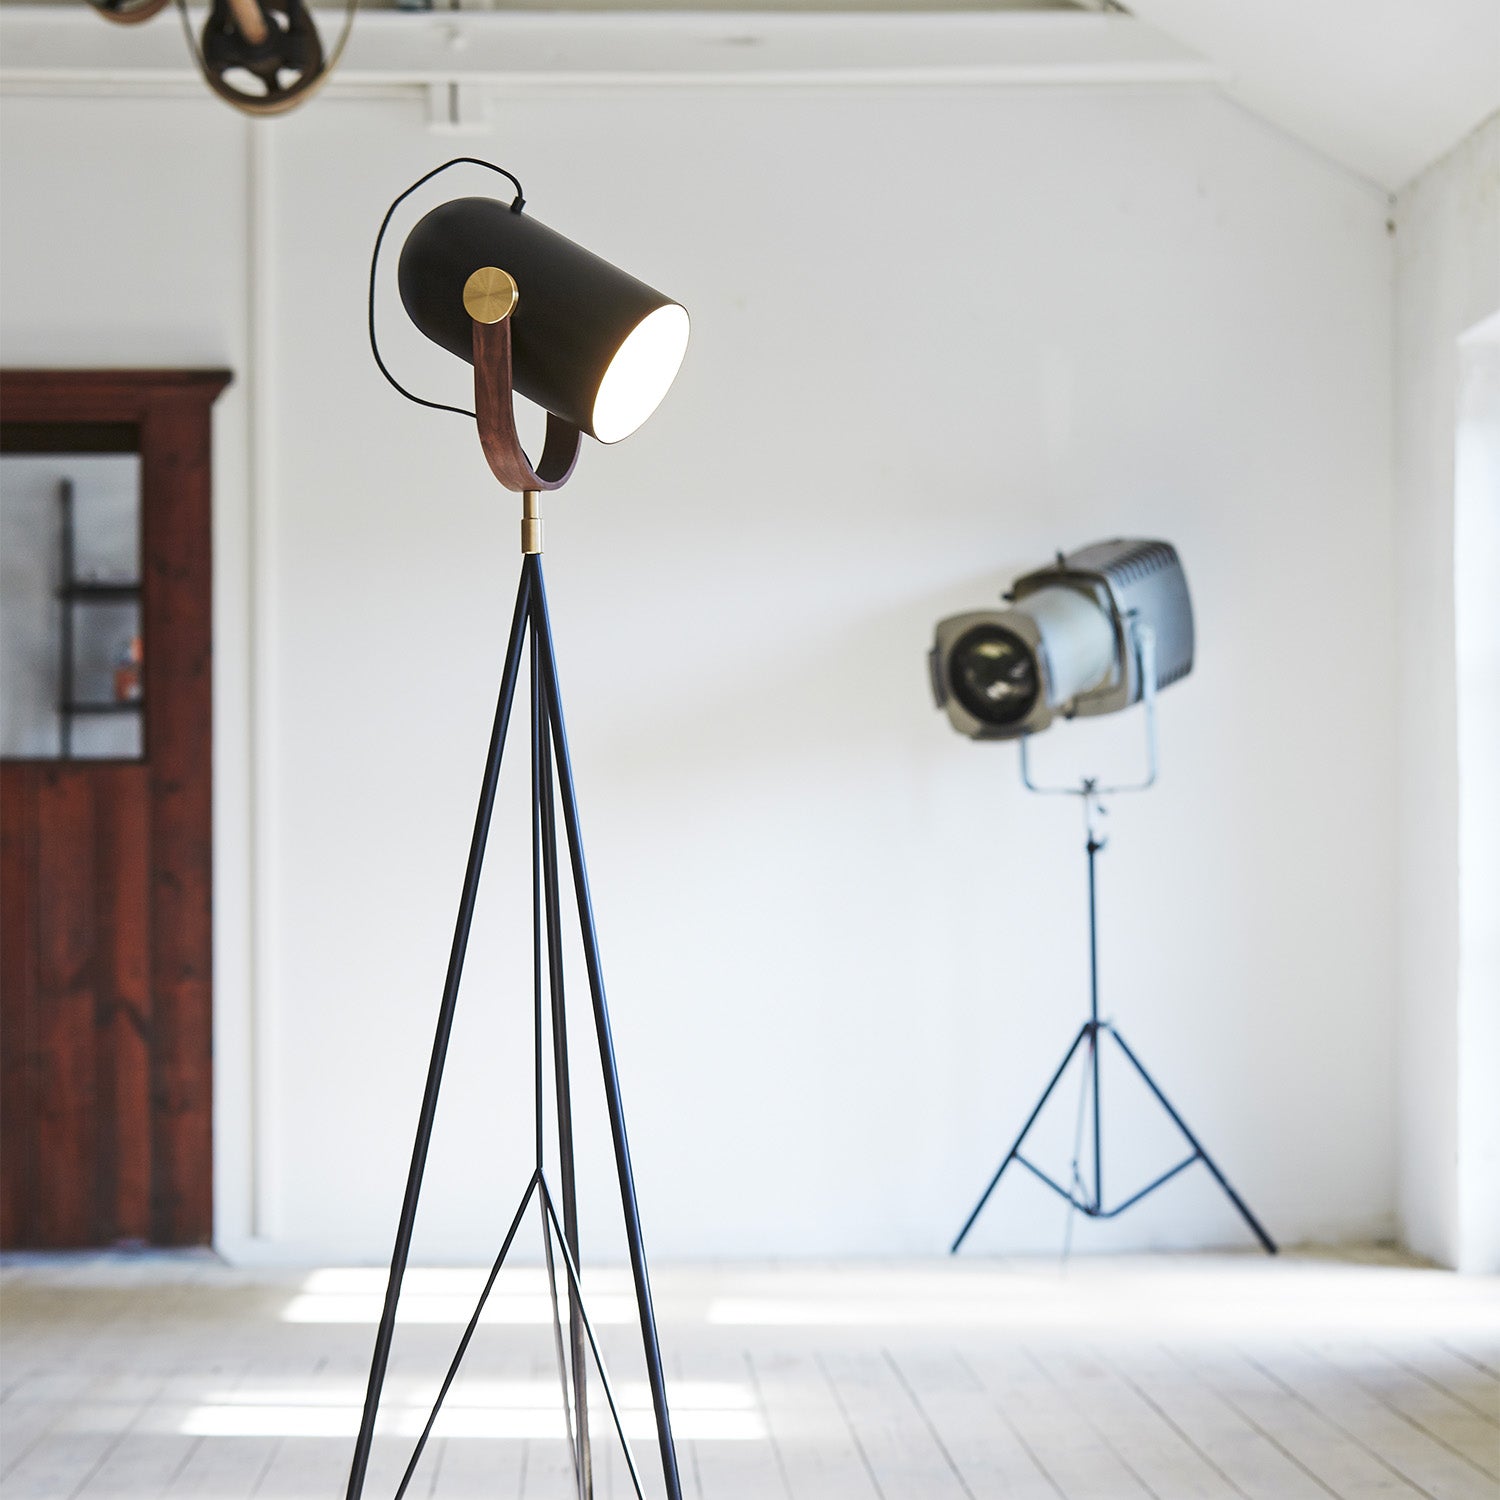 CARRONADE - Vintage projector floor lamp, living room or adult bedroom